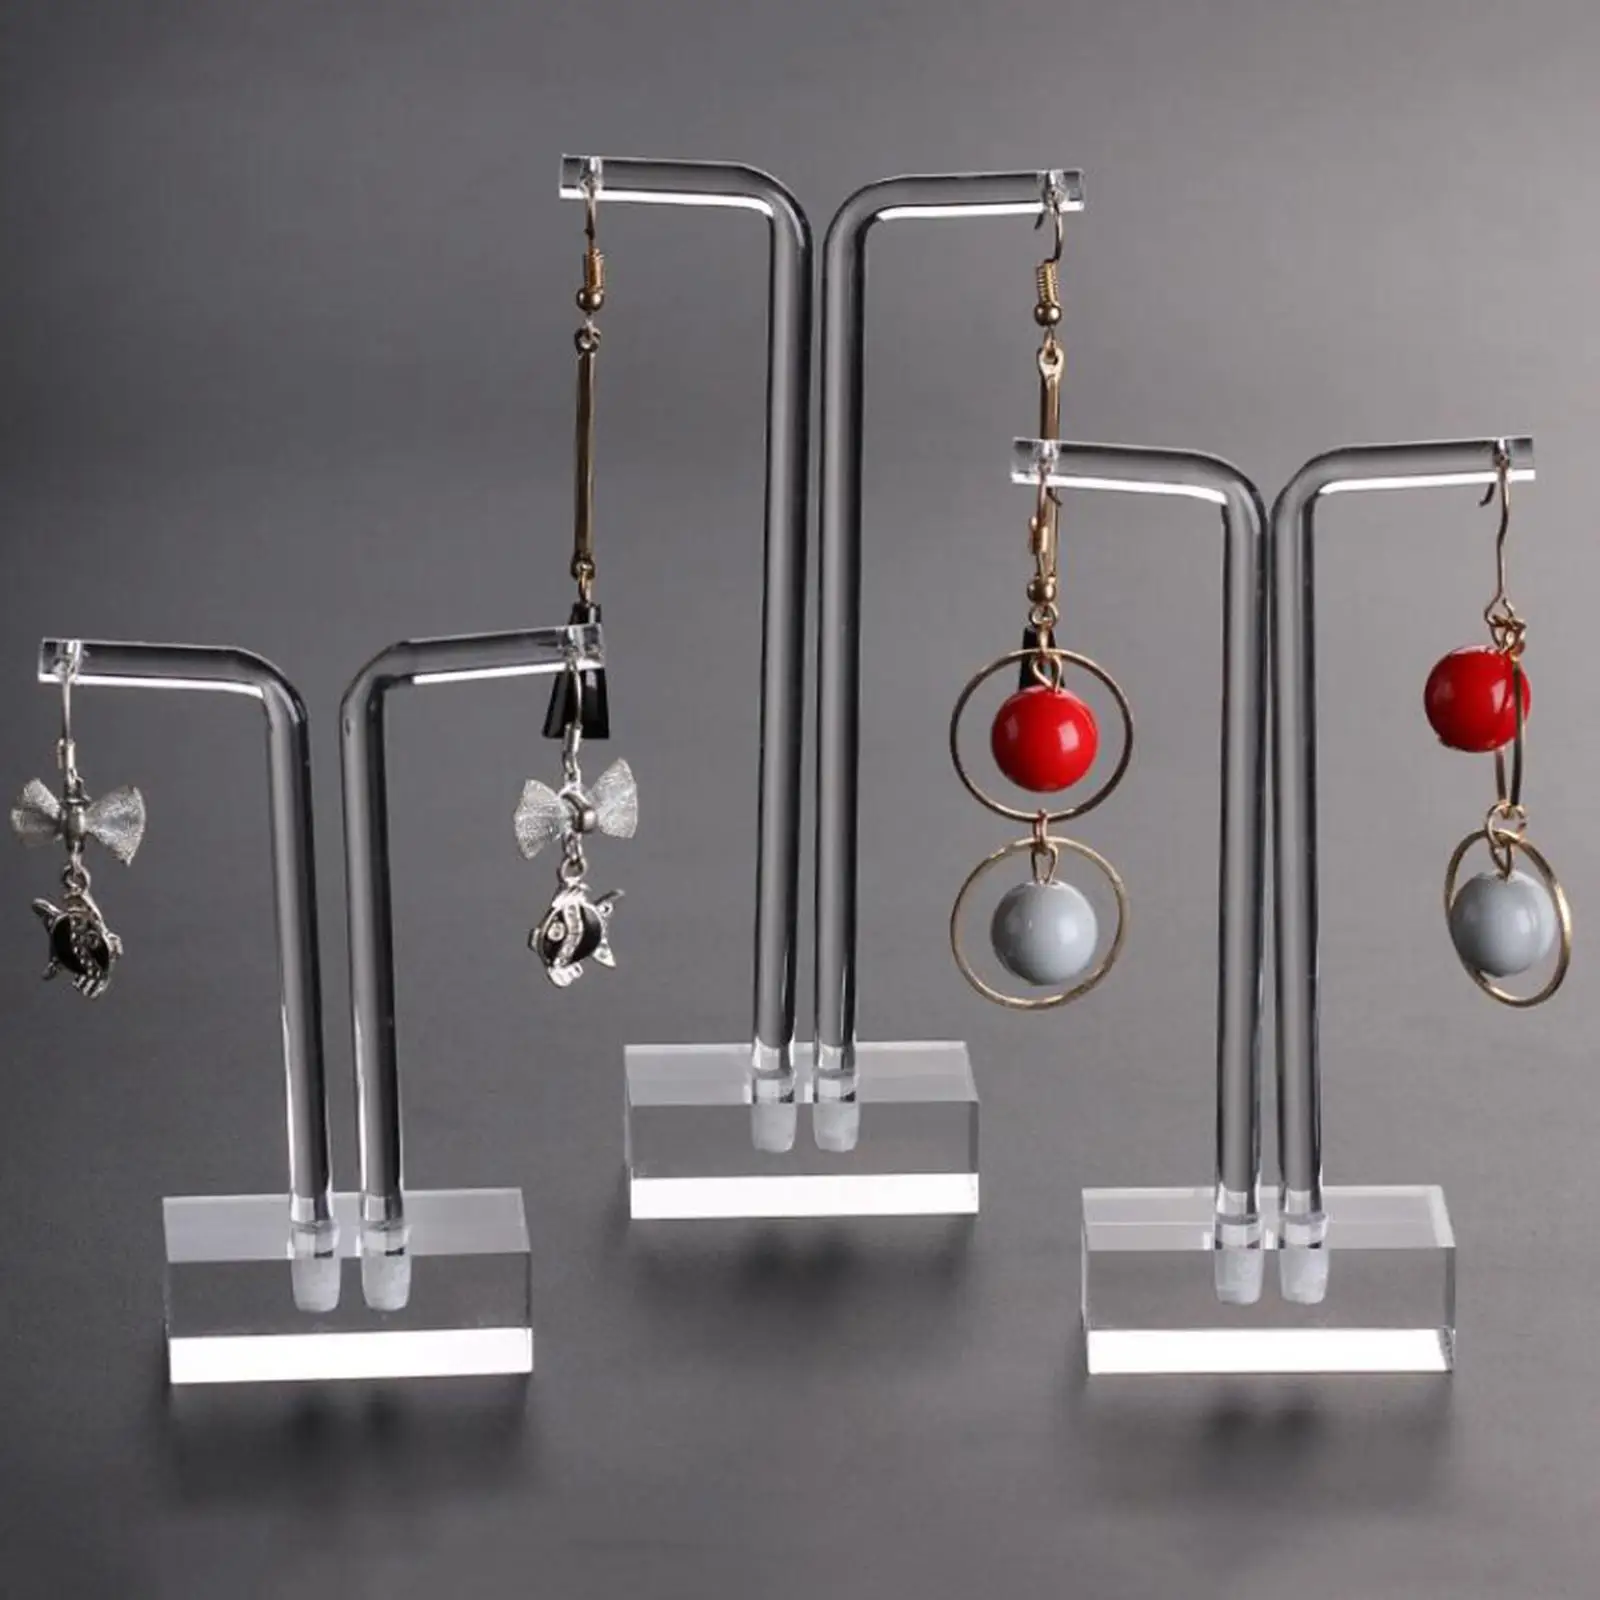 Ear Studs Earring , Set of 3 Acrylic Earring Display  Stand Holder Showcase,  Organizer Earring Tree